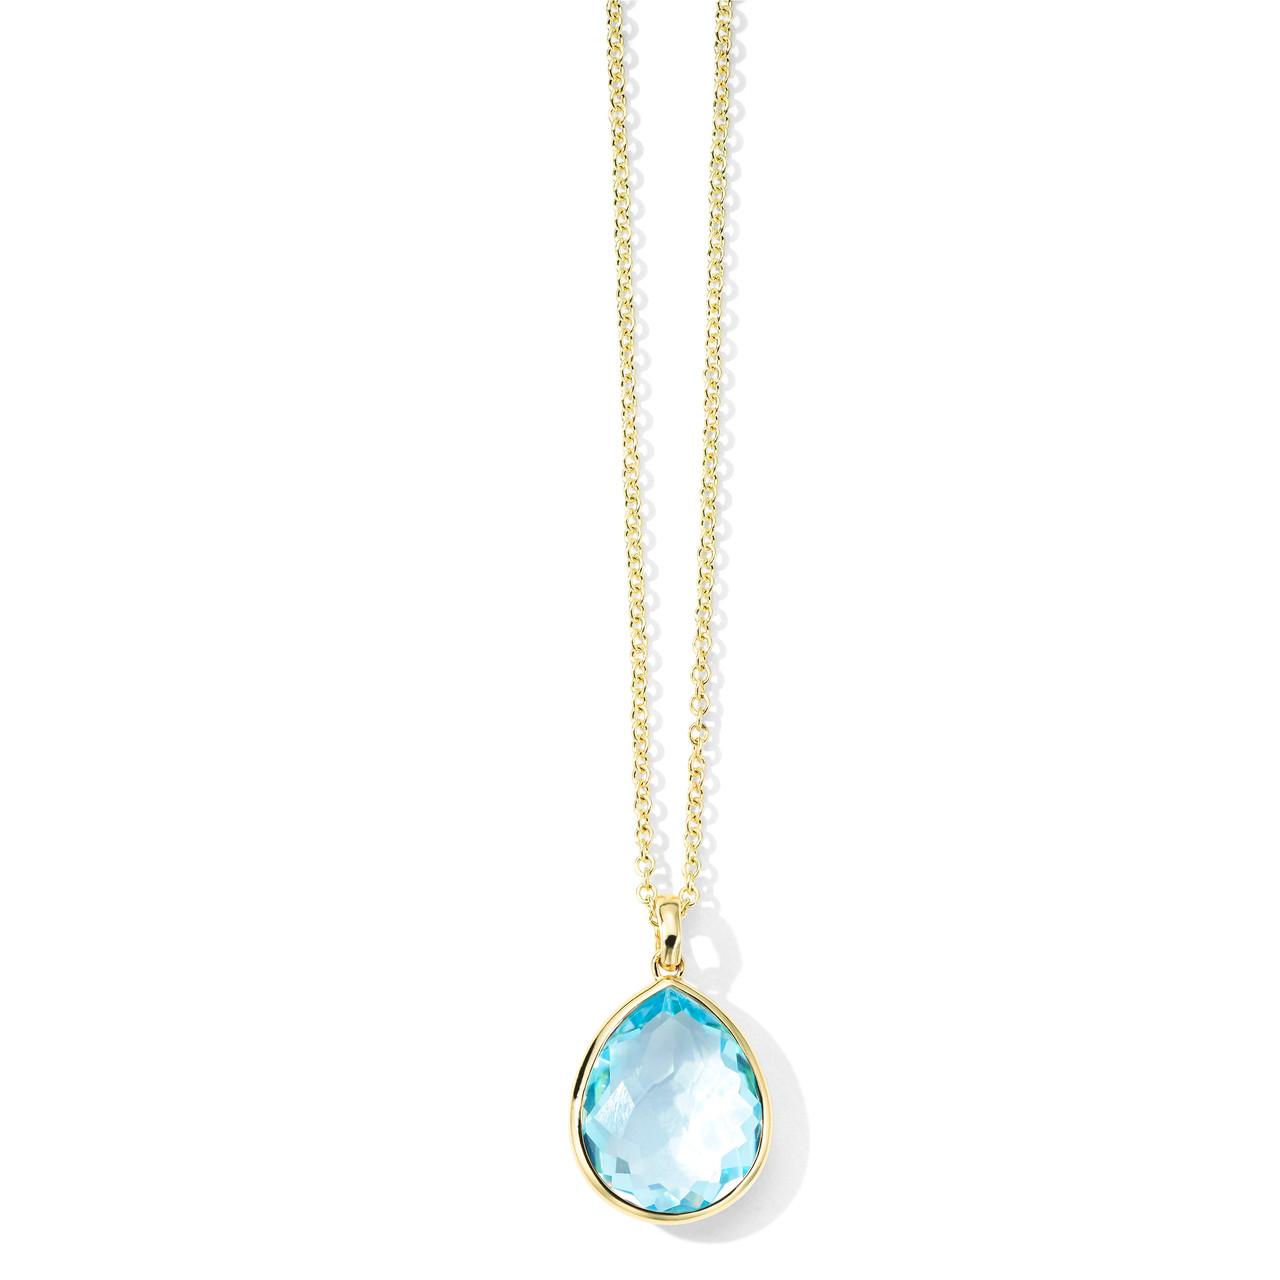 Ippolita Rock Candy Medium Teardrop 18k Gold Pendant Necklace with Blue Topaz